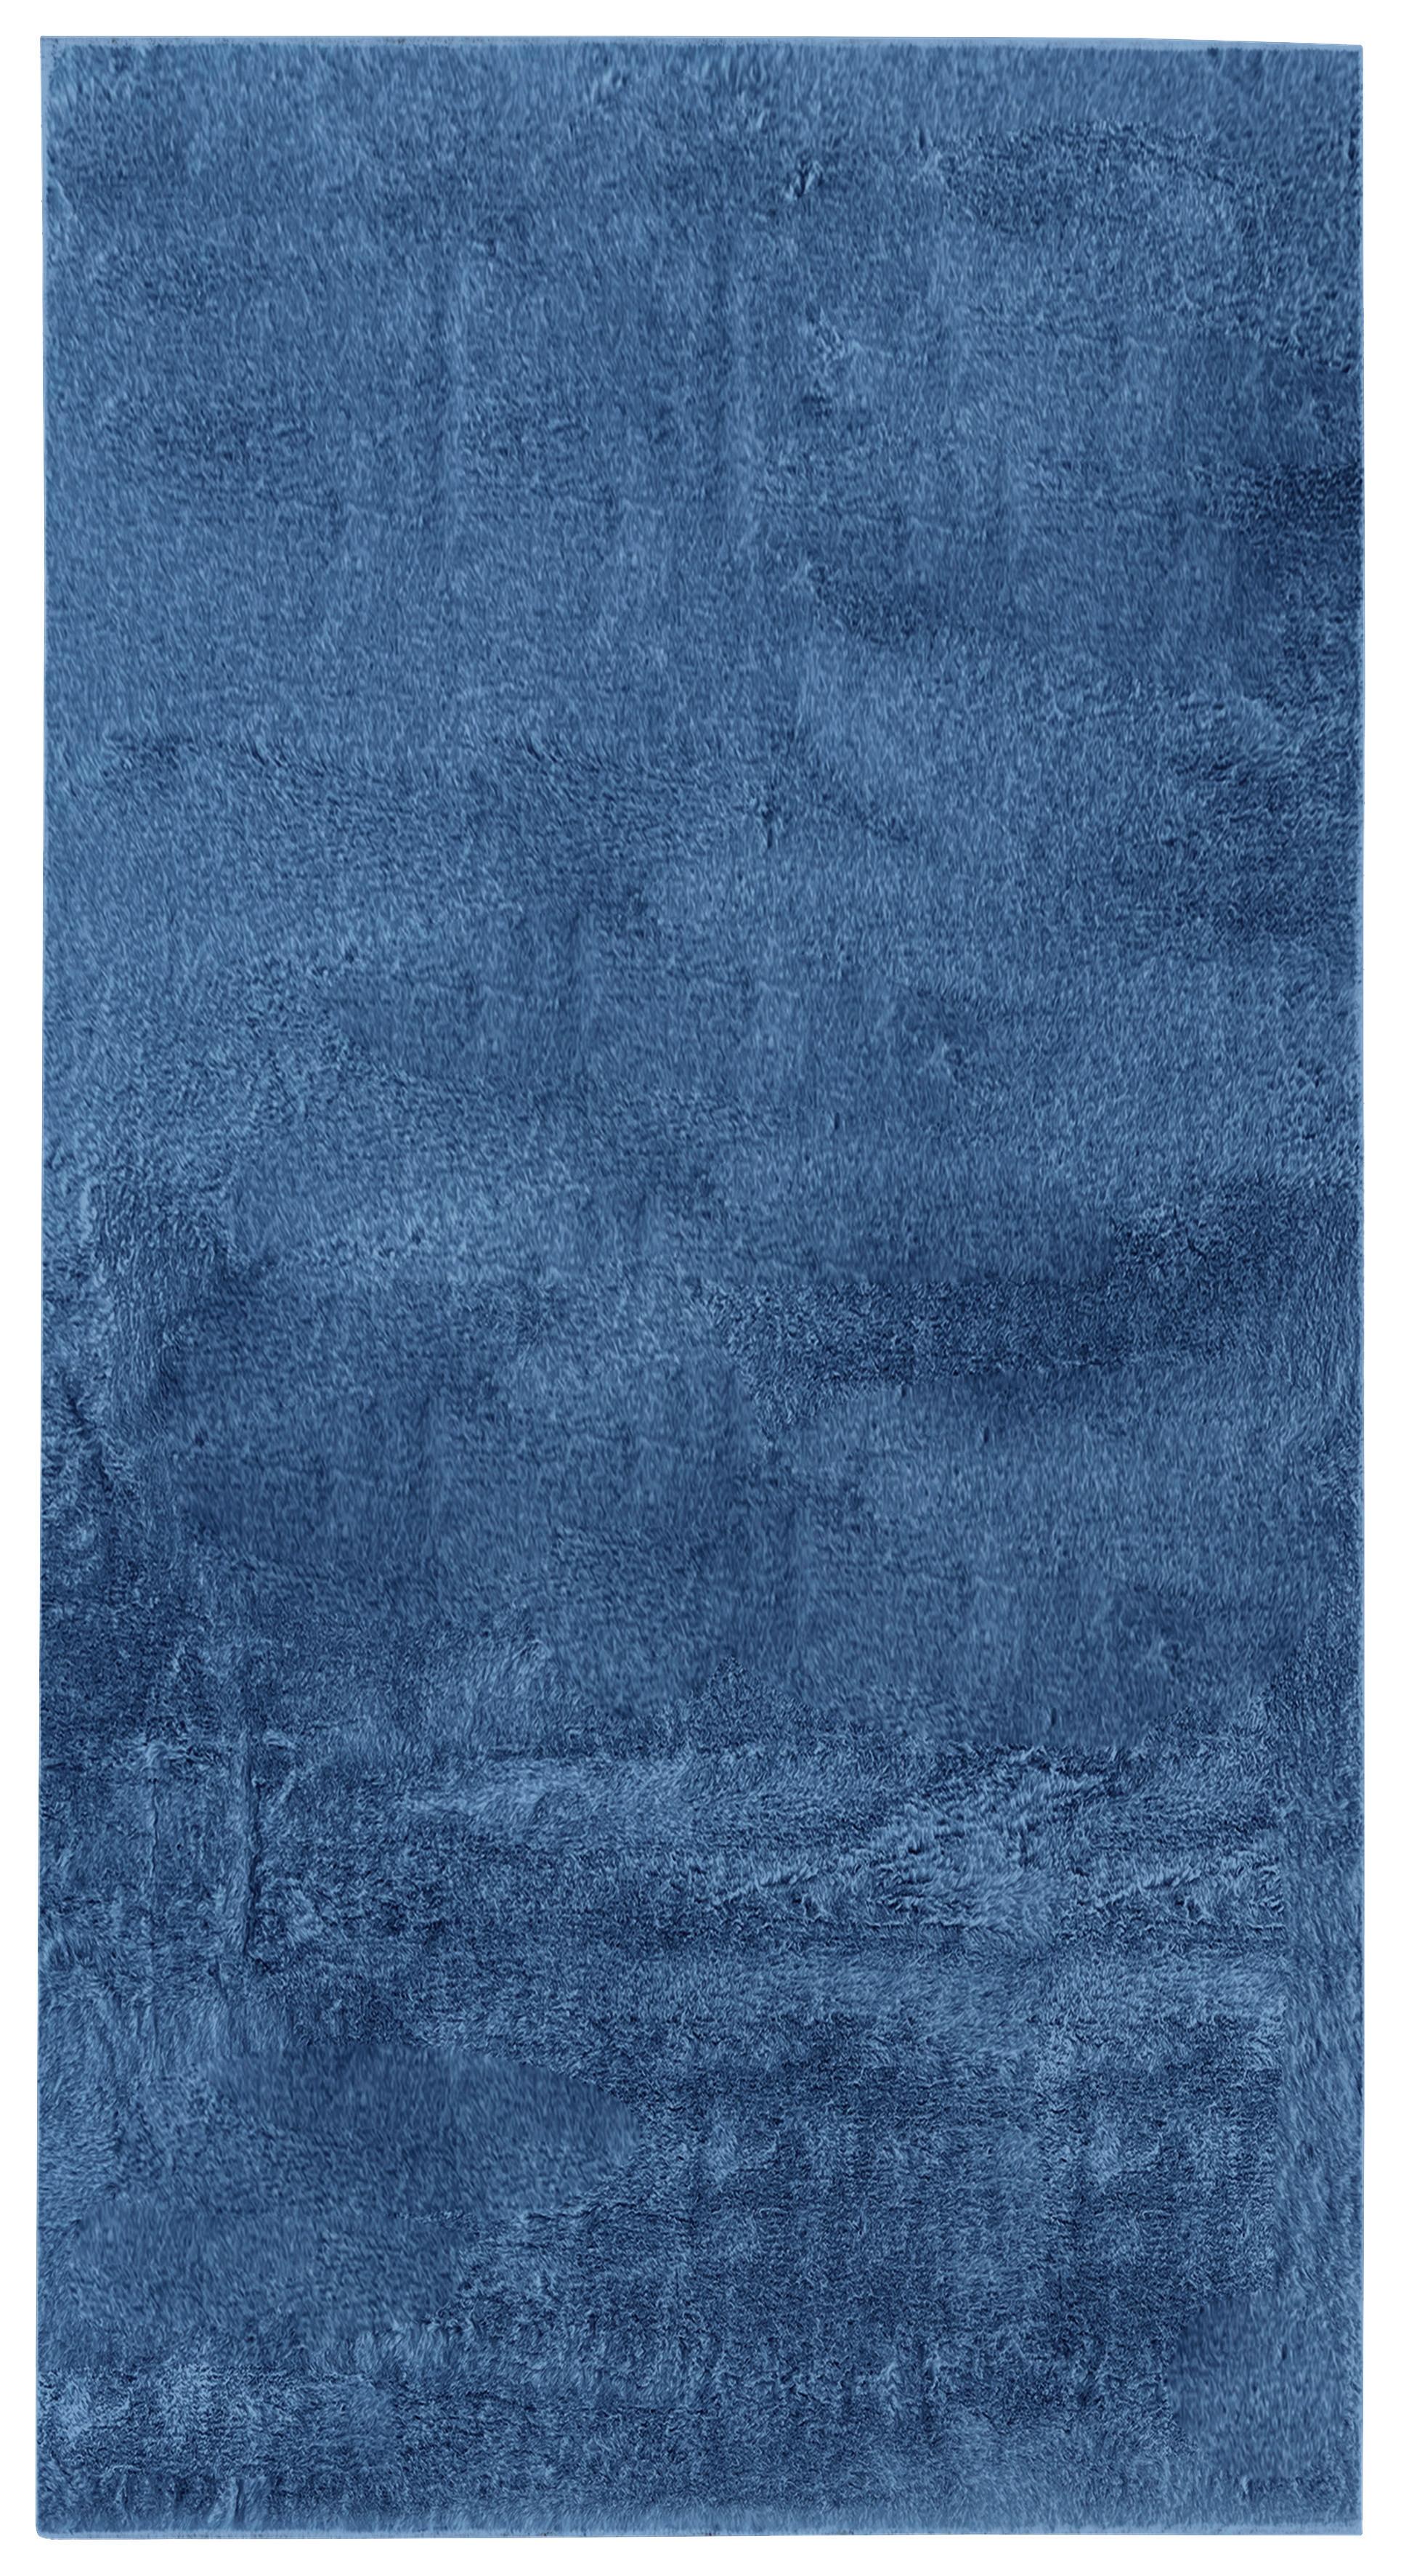 Umjetno Krzno 80/150cm Caroline - tamno plava, Konventionell, tekstil (80/150cm) - Modern Living